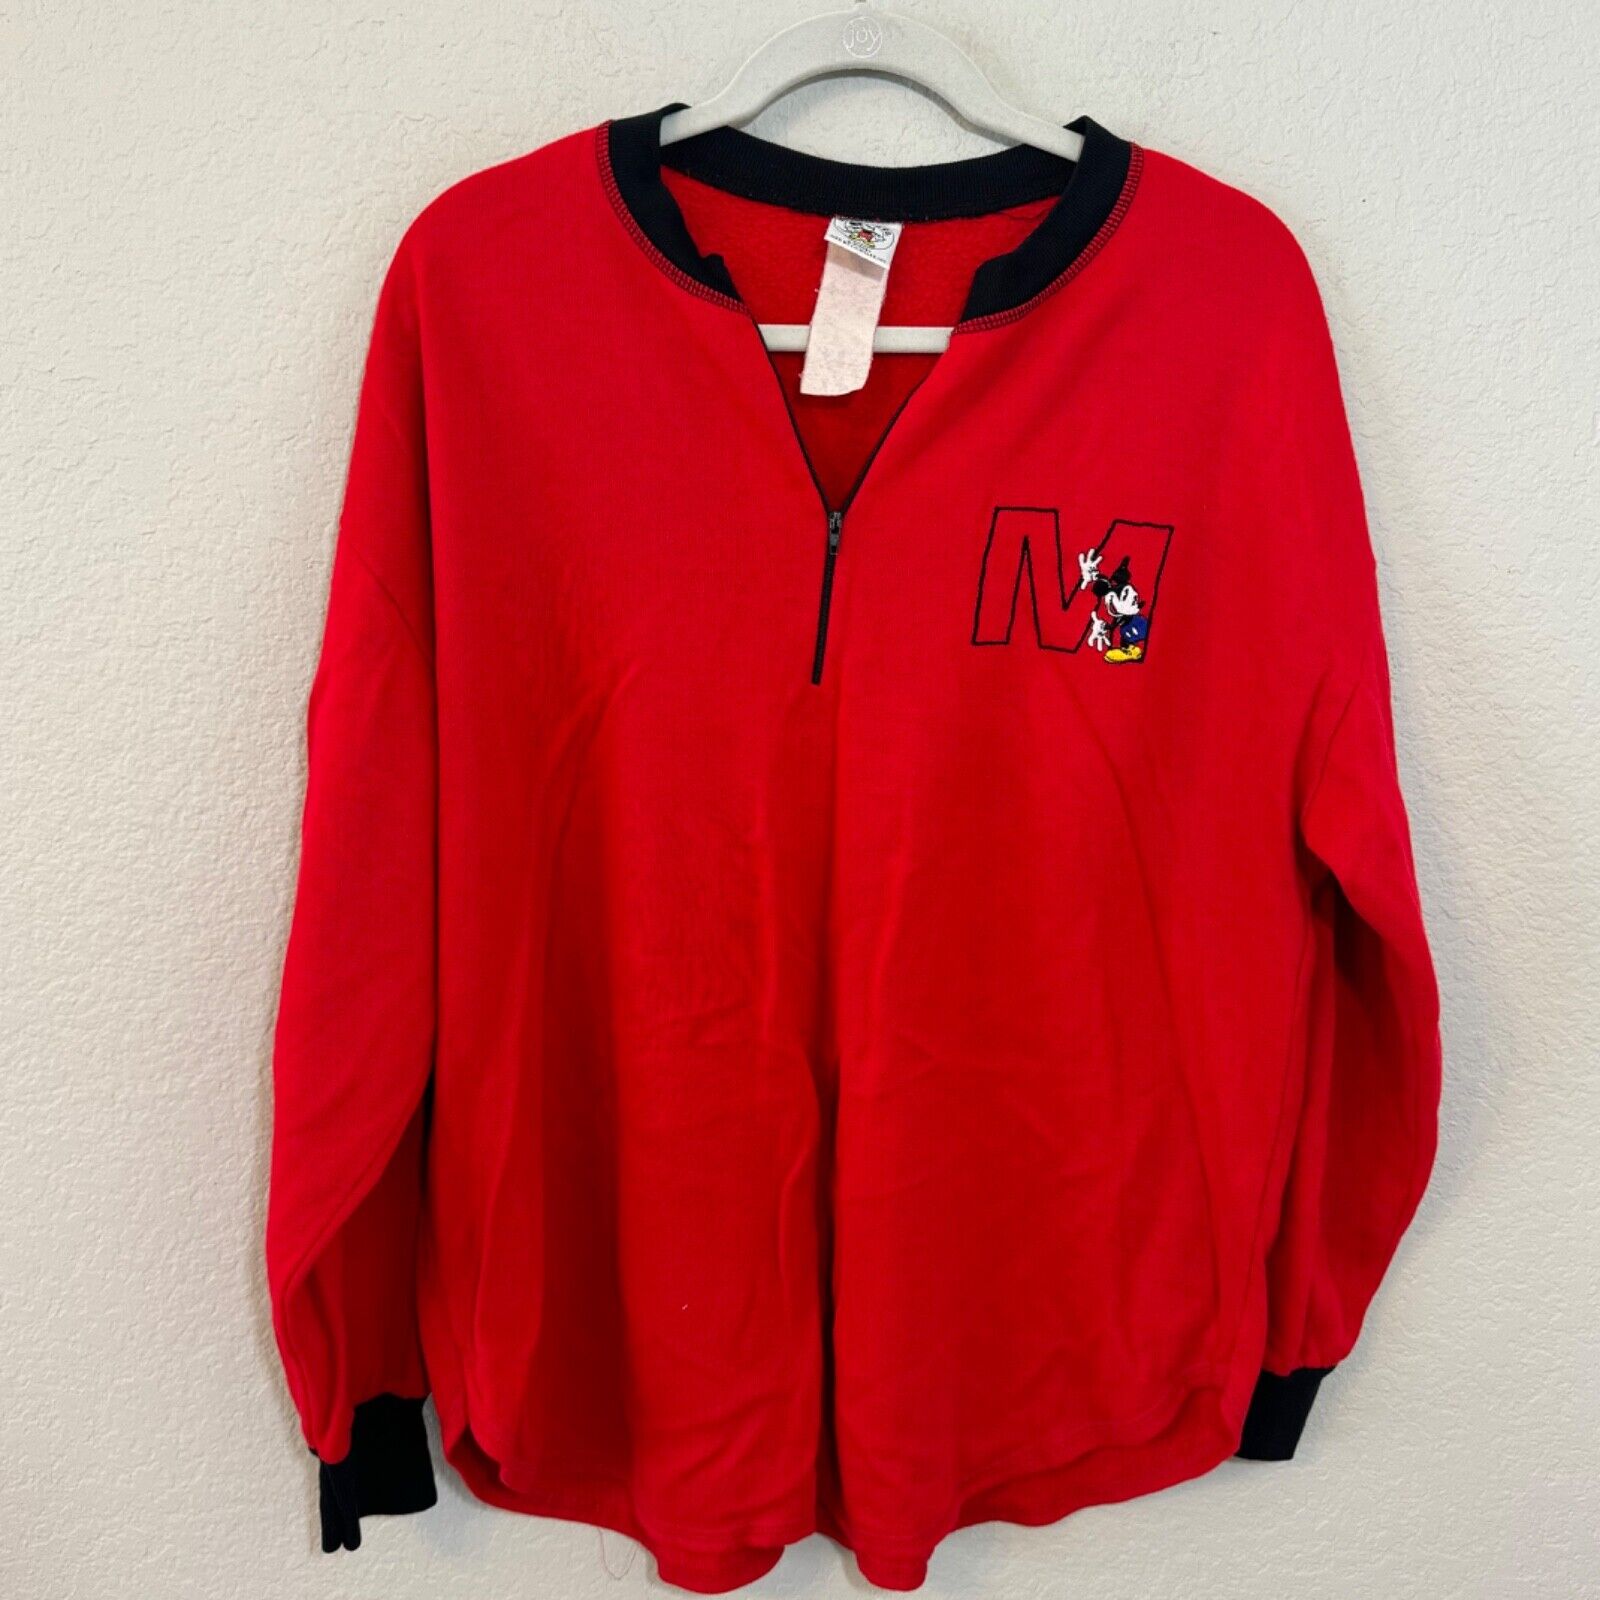 Vintage Disney Mickey Mouse Crewneck Sweatshirt XL Red black Zipper Embroidered